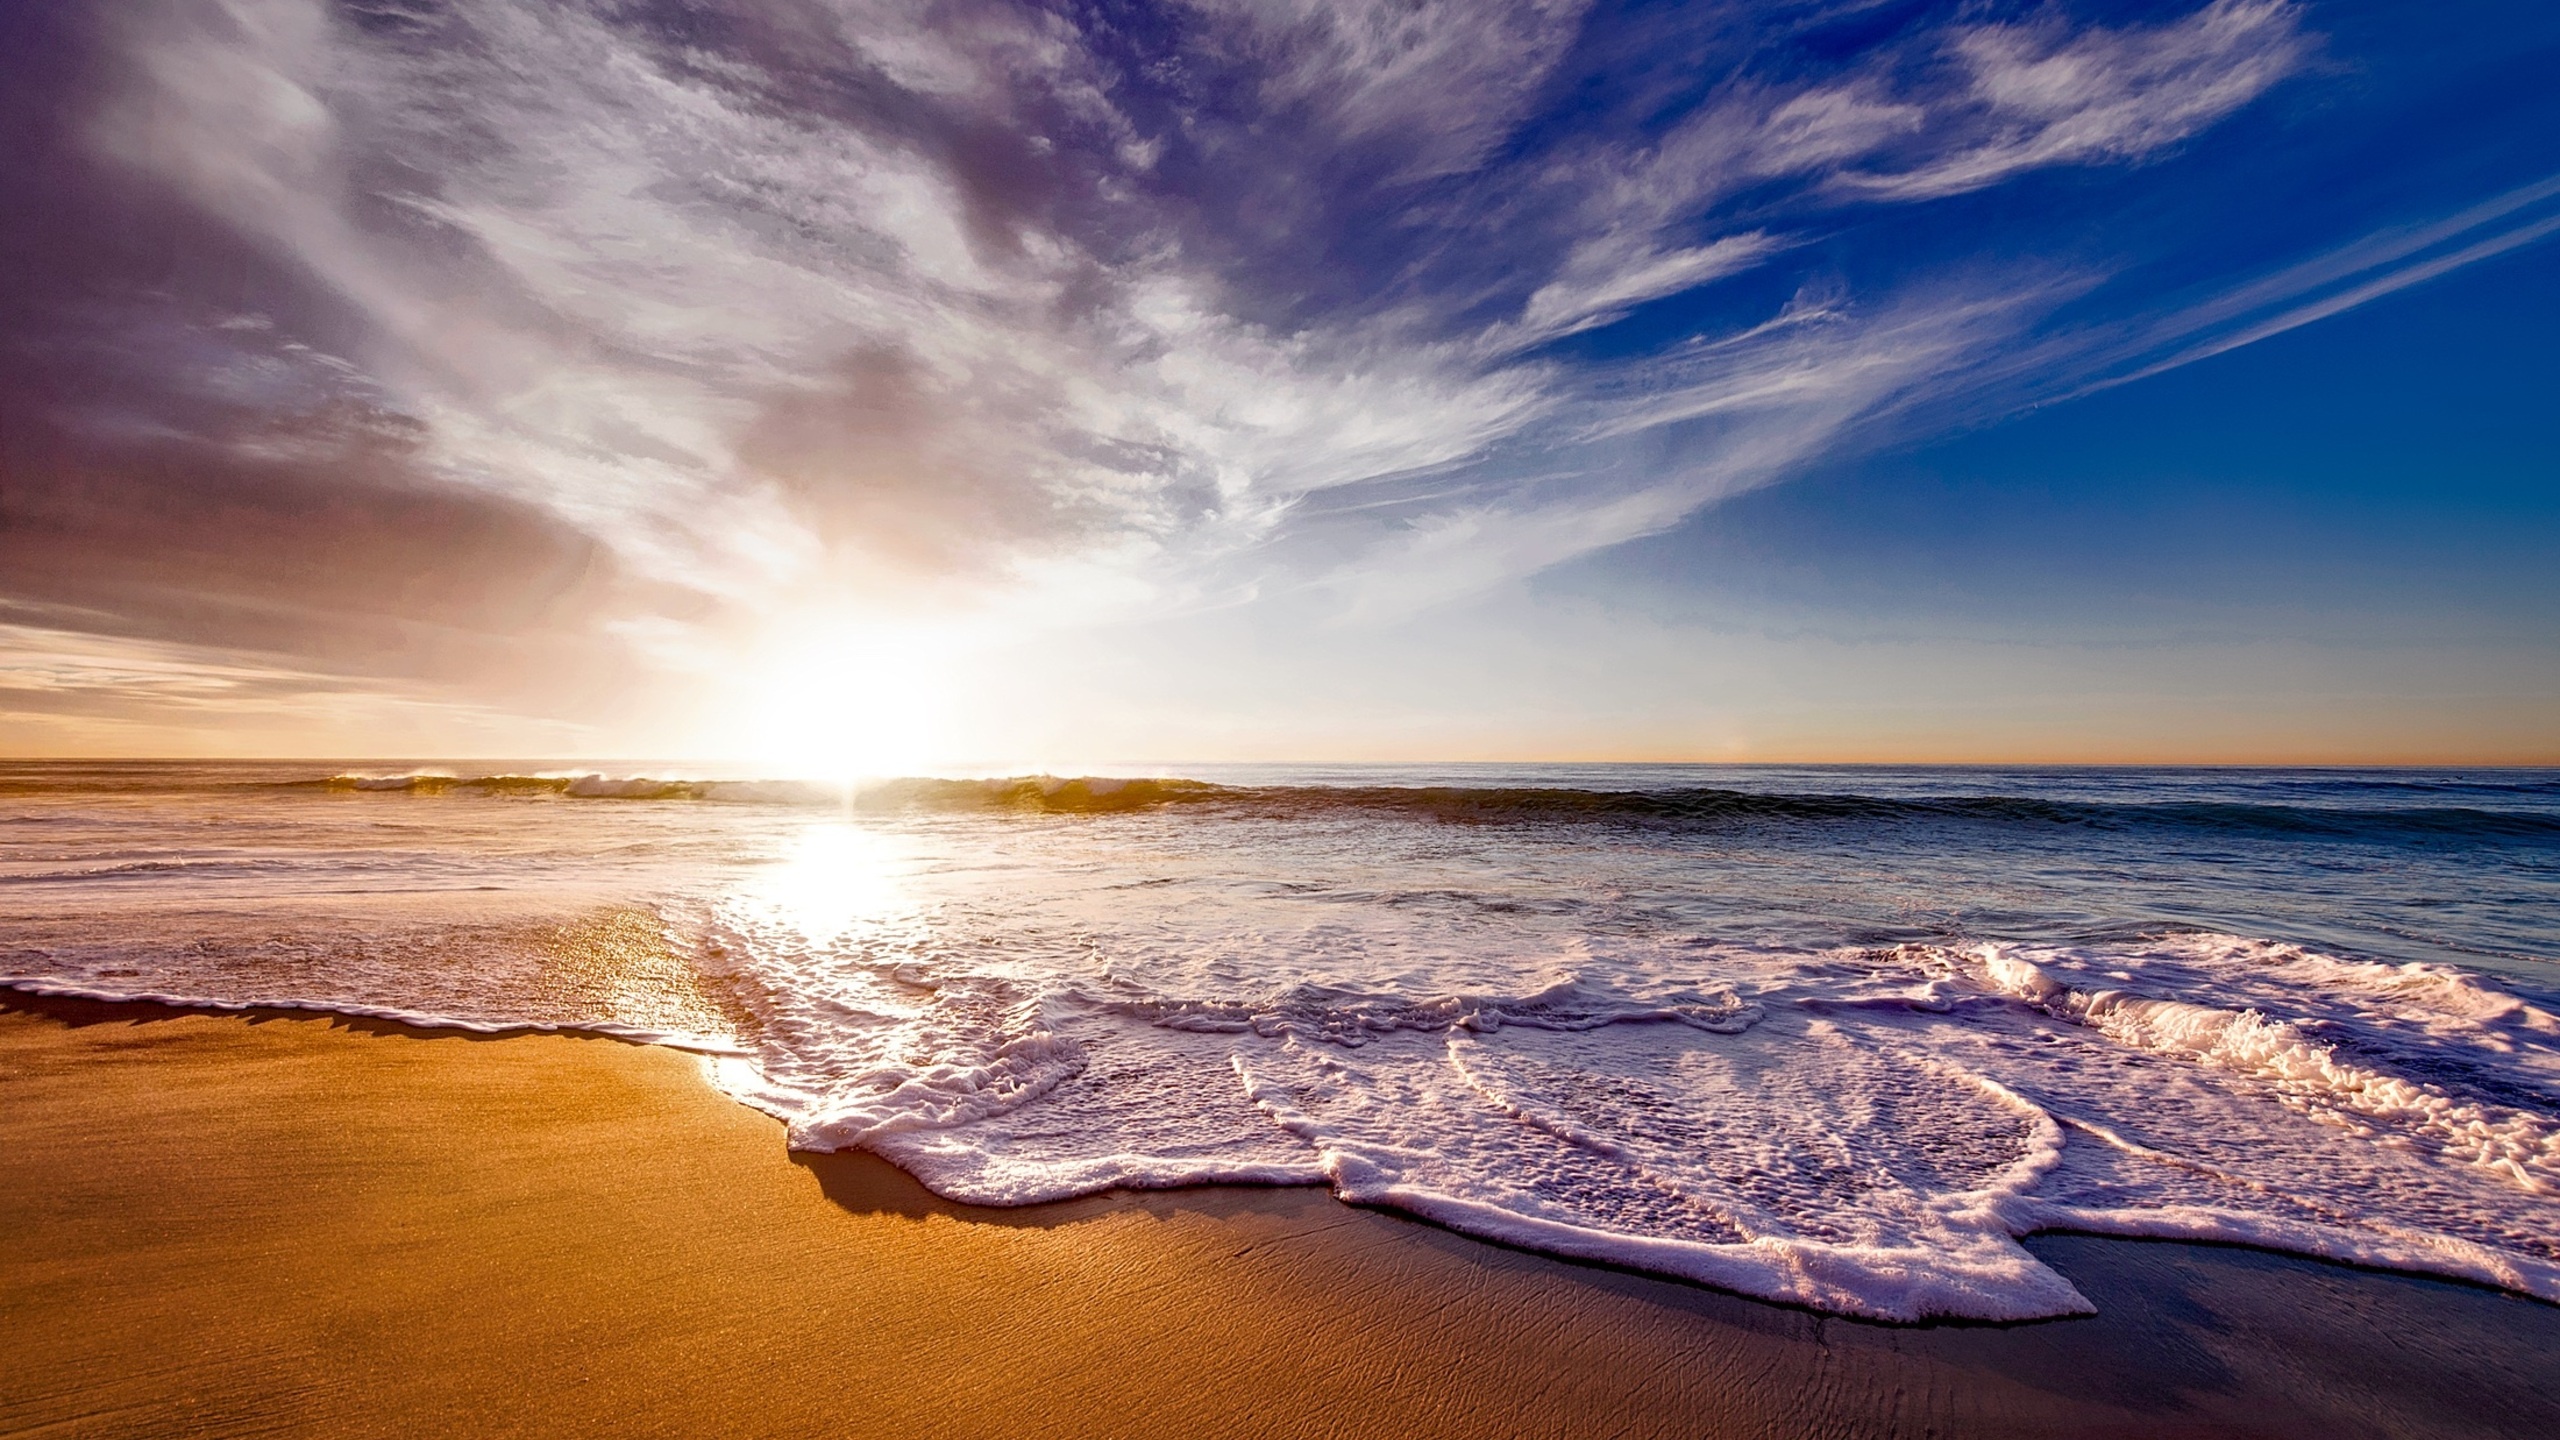 California, Ocean shore wallpapers, Dusk sunset, Serenity in nature, 2560x1440 HD Desktop